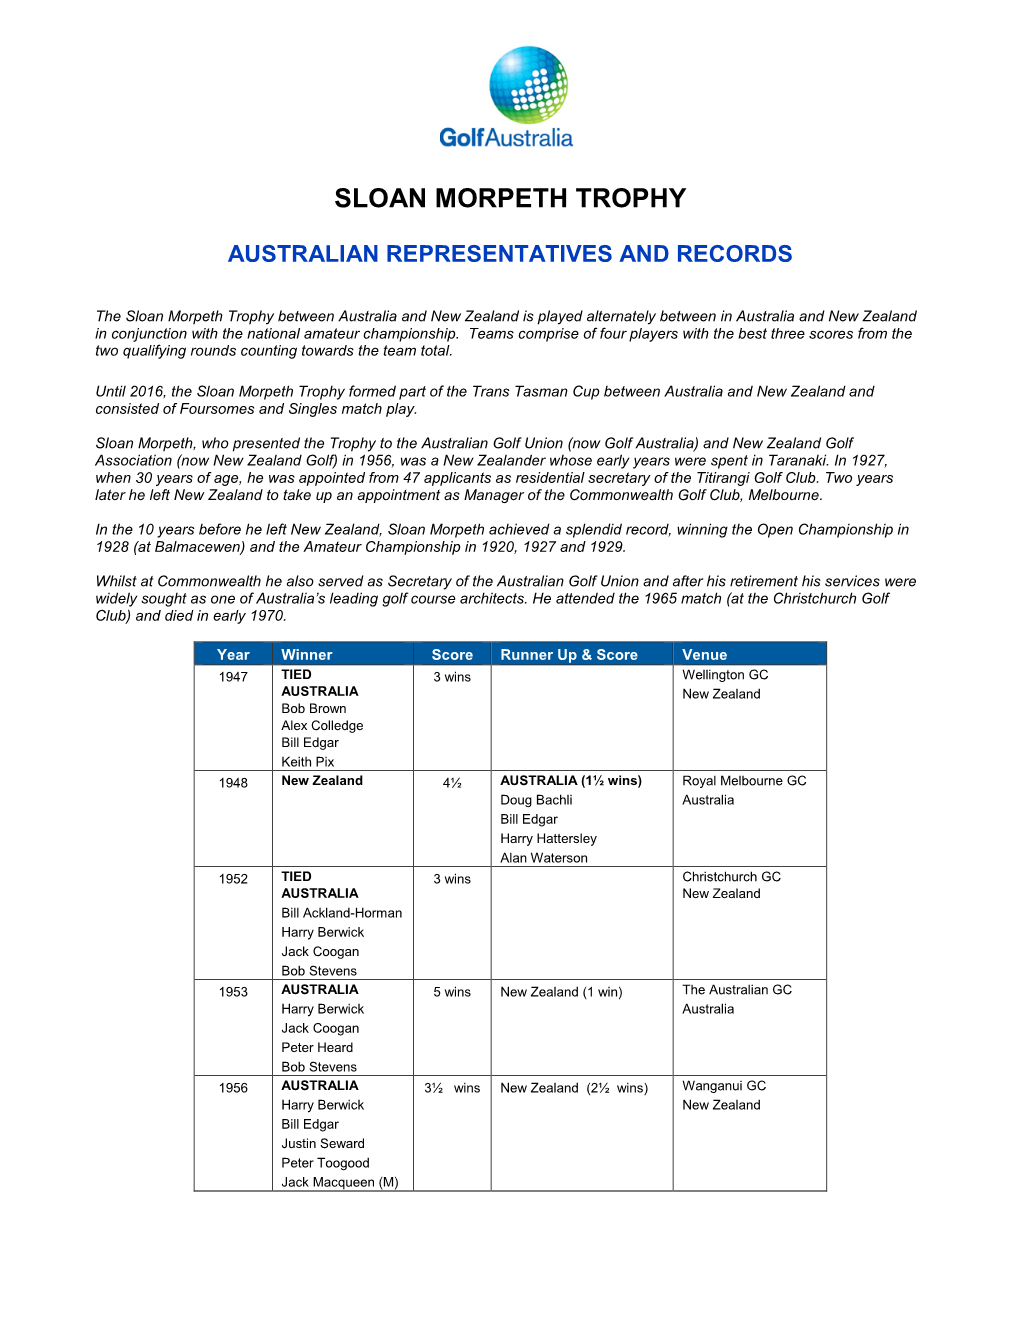 Sloan Morpeth Trophy